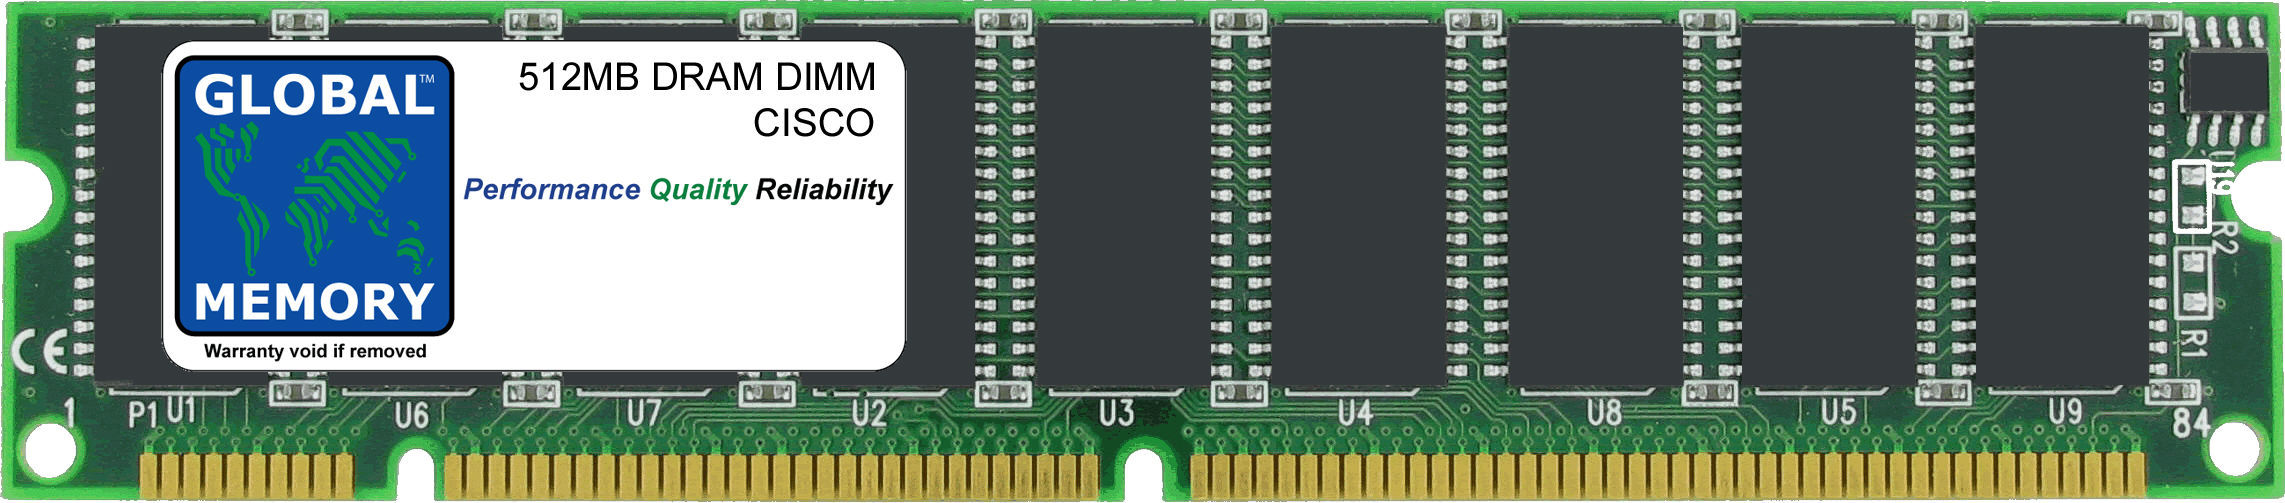 512MB DRAM DIMM MEMORY RAM FOR CISCO 12000 SERIES ROUTERS PRP-1 & PRP-2 ROUTE PROCESSORS (MEM-PRP-512M) - Click Image to Close